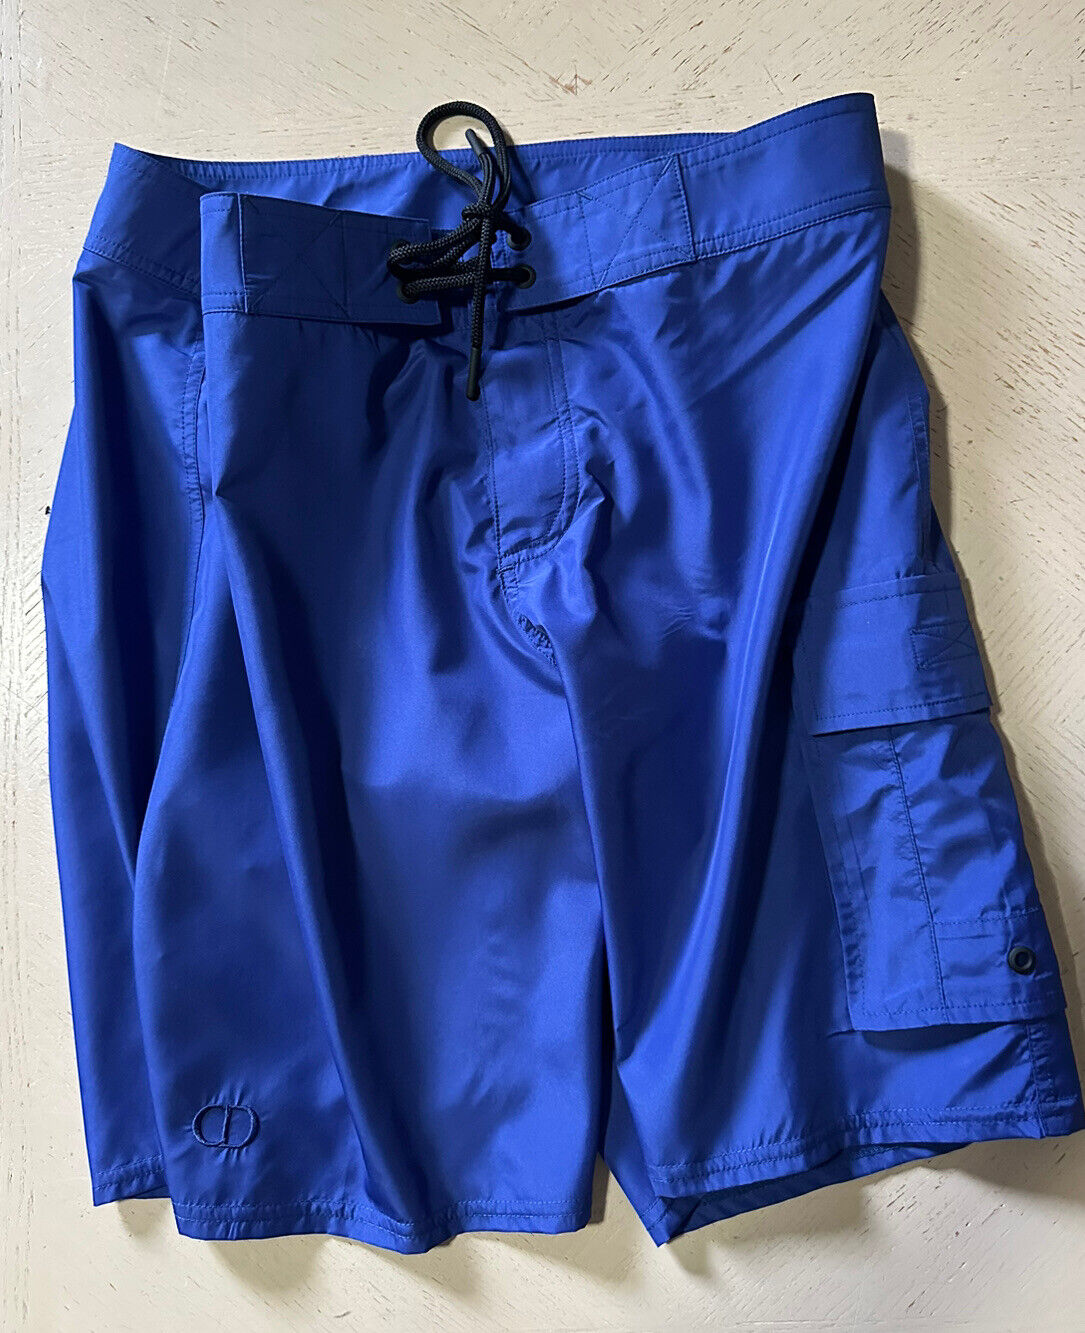 NWT $790 DIOR Drawstring Board Shorts Swim Short Blue size S